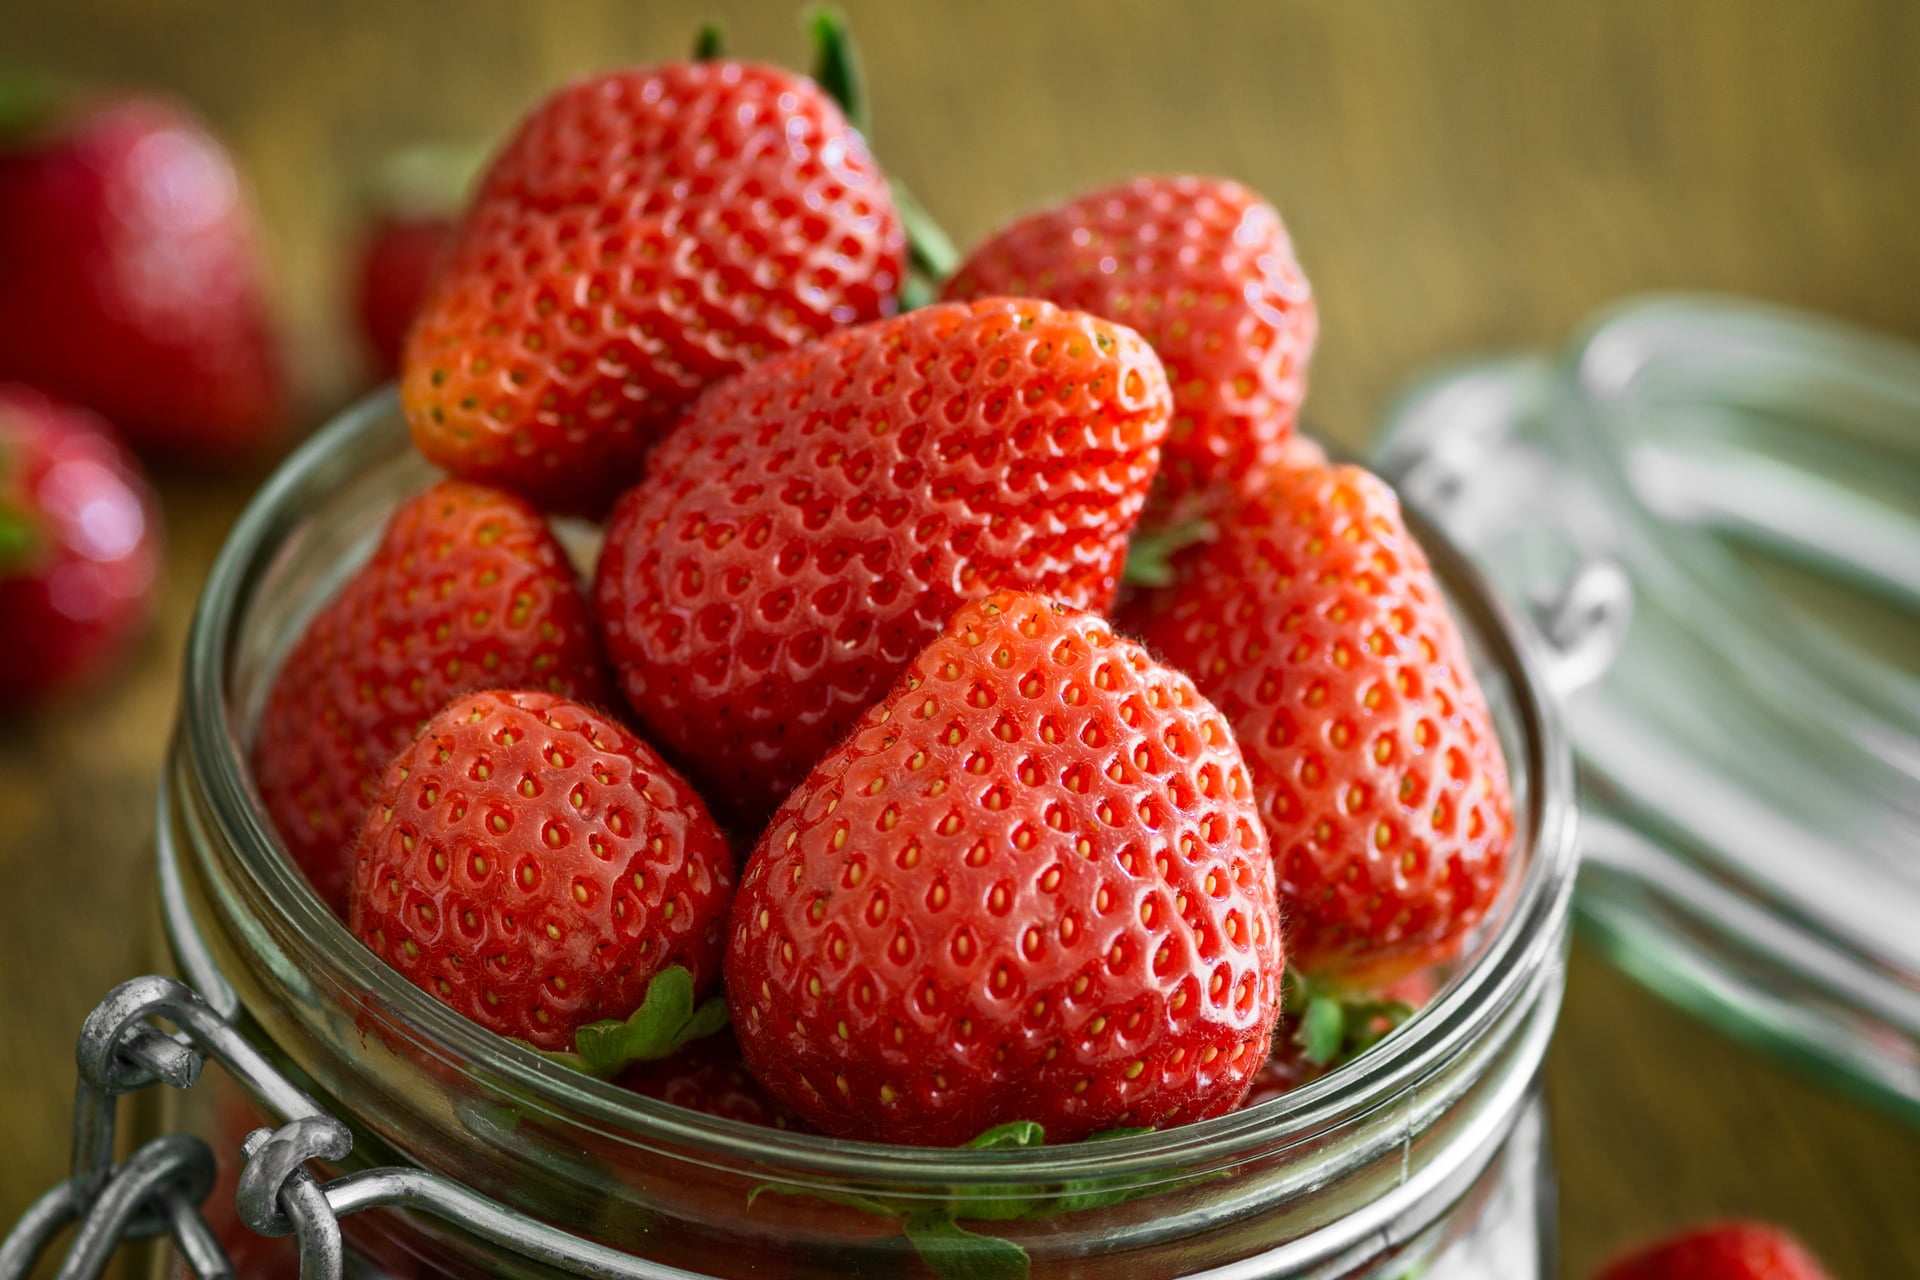 strawberries lot, Strawberry, Berry, Juicy